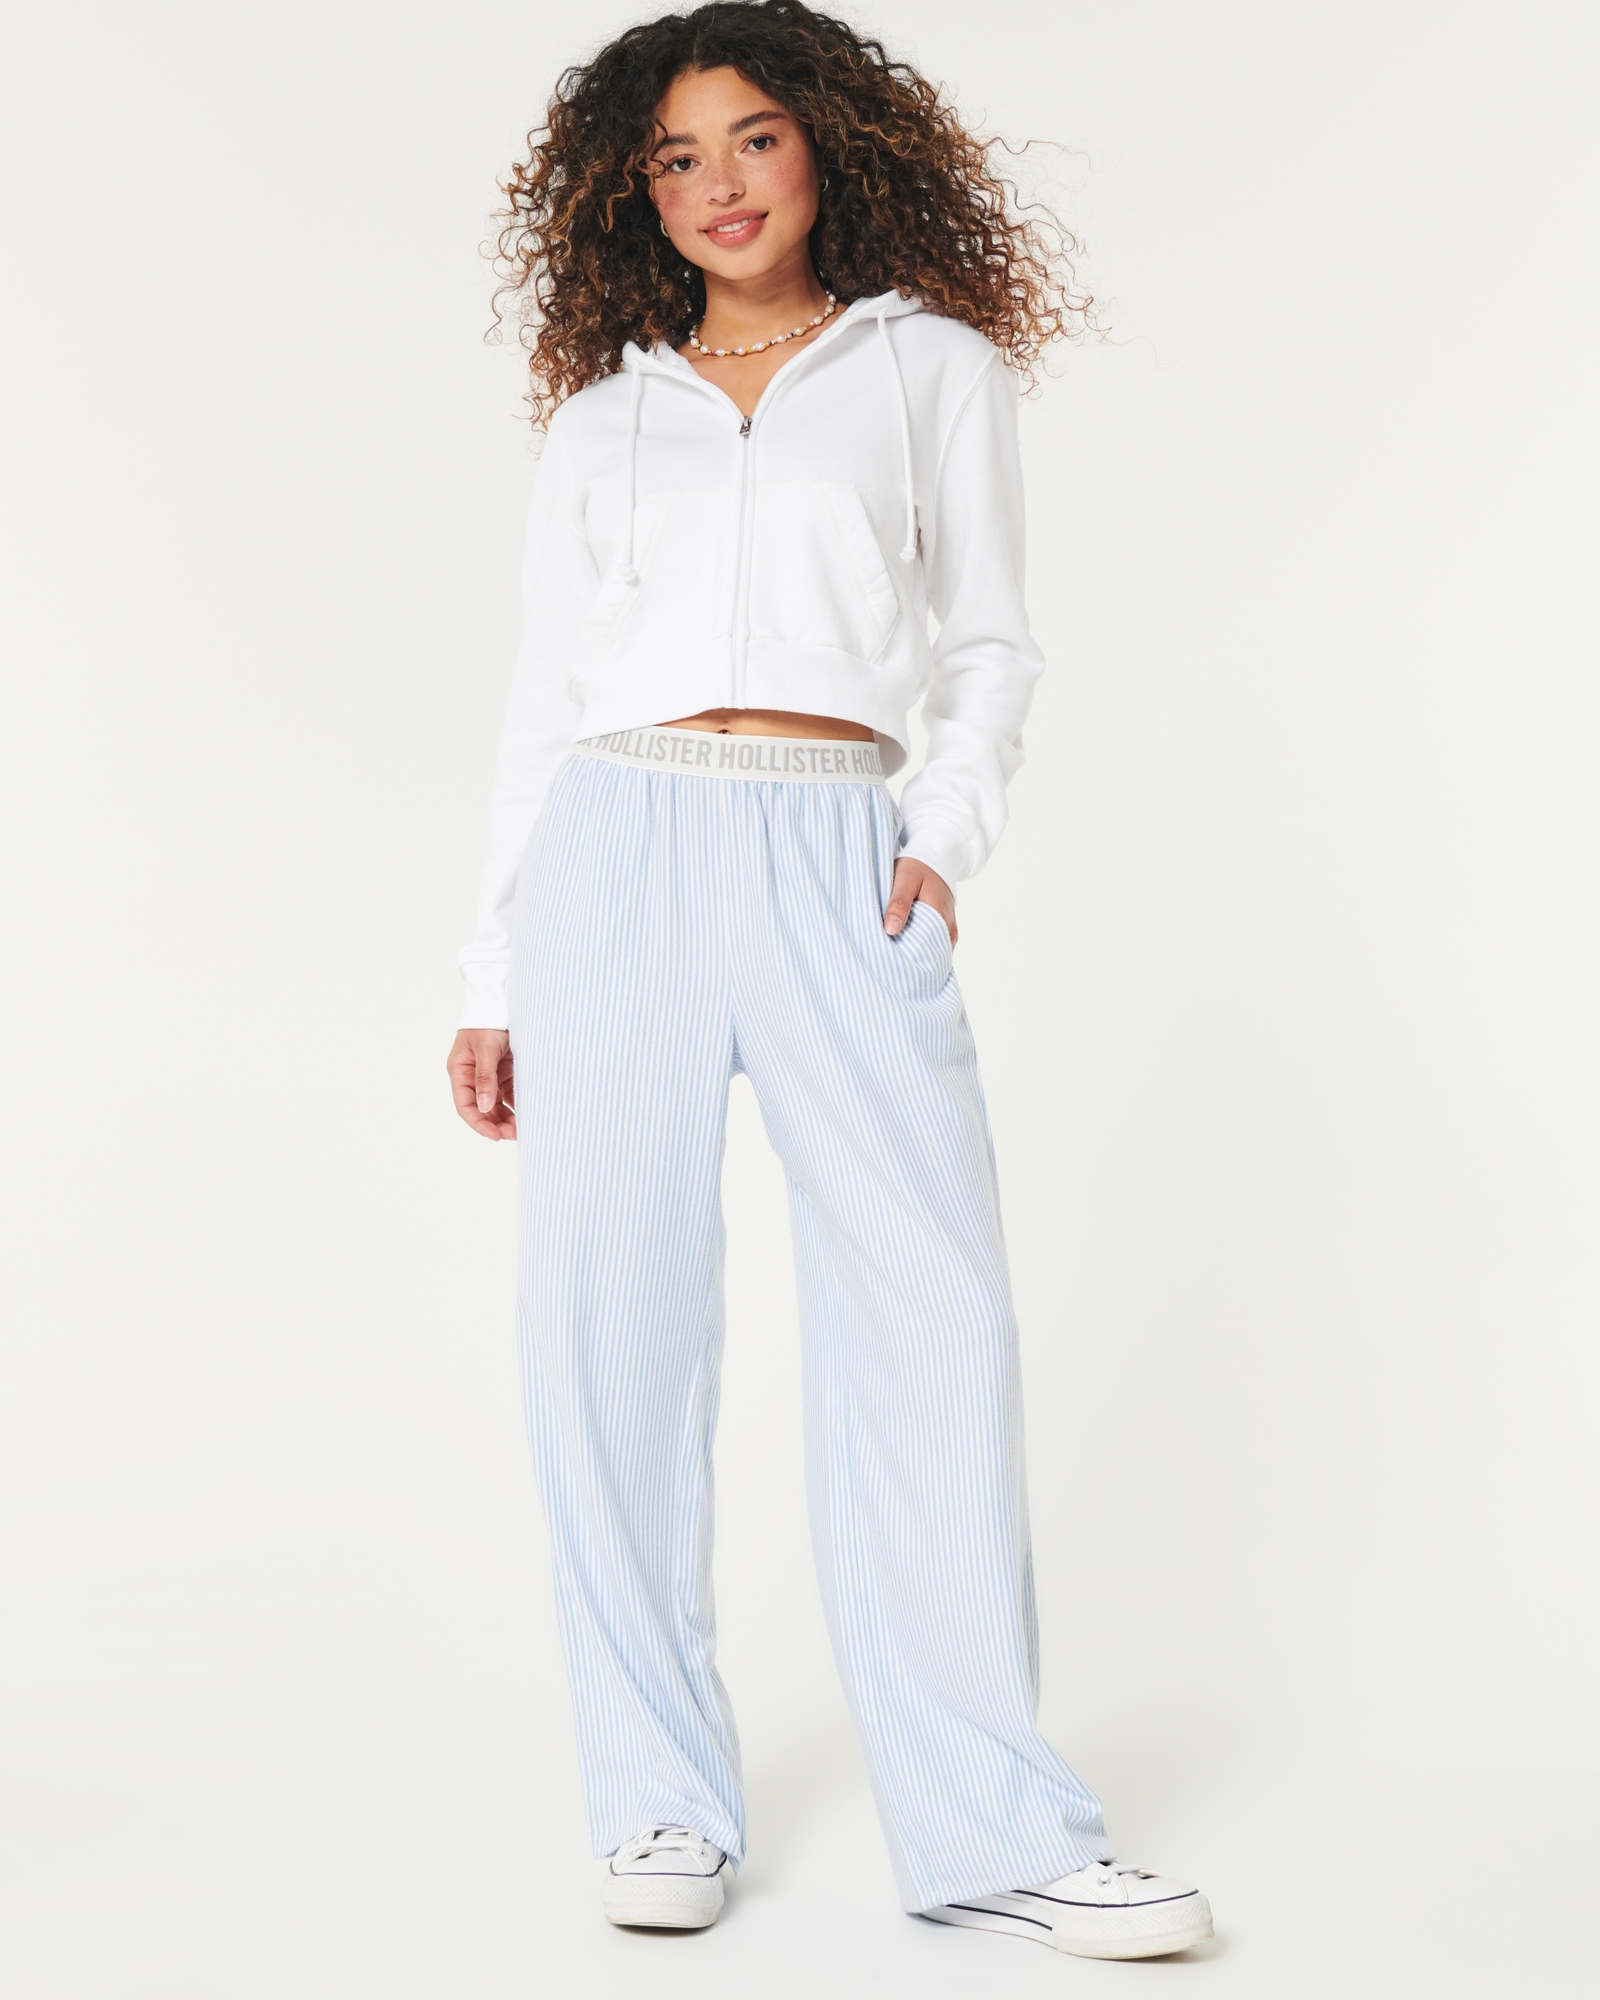  Women Pajama Pants Sleepwear 6324-10668-RB-2X